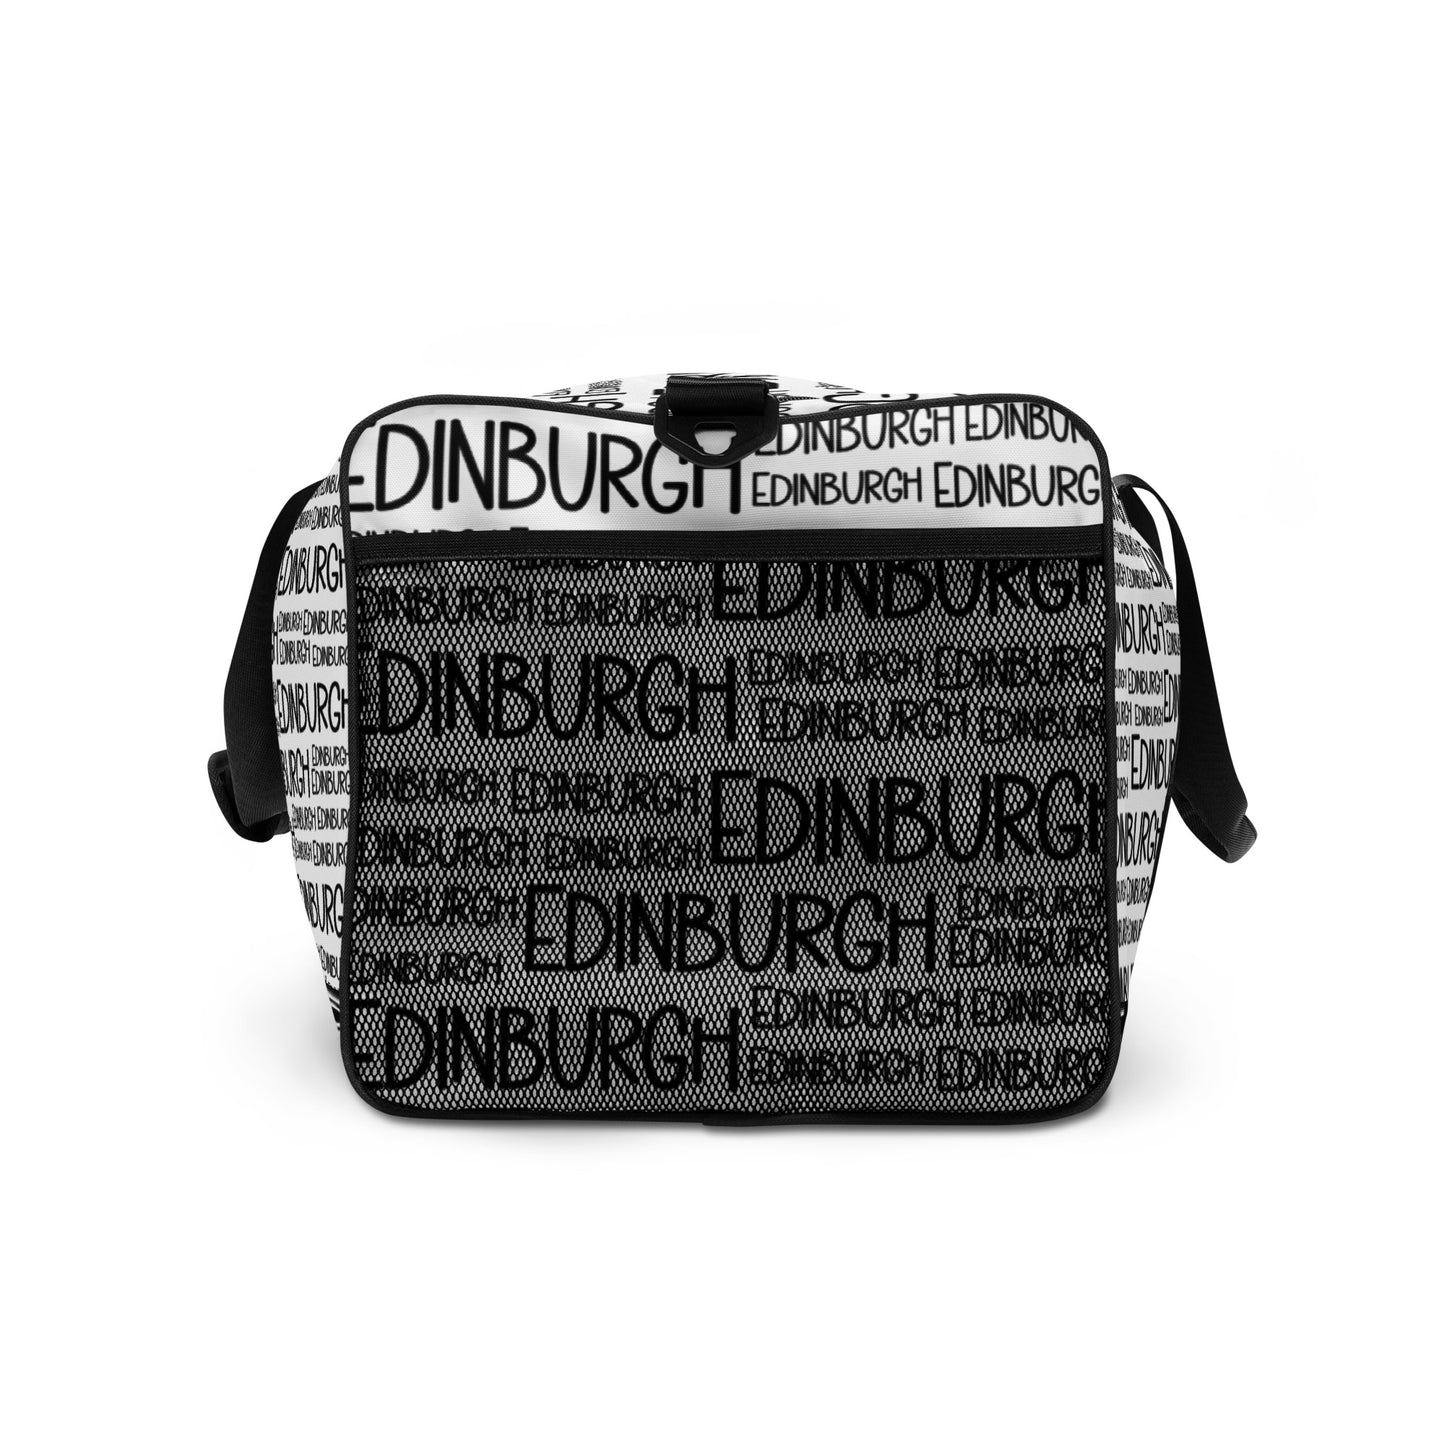 Edinburgh Duffle bag